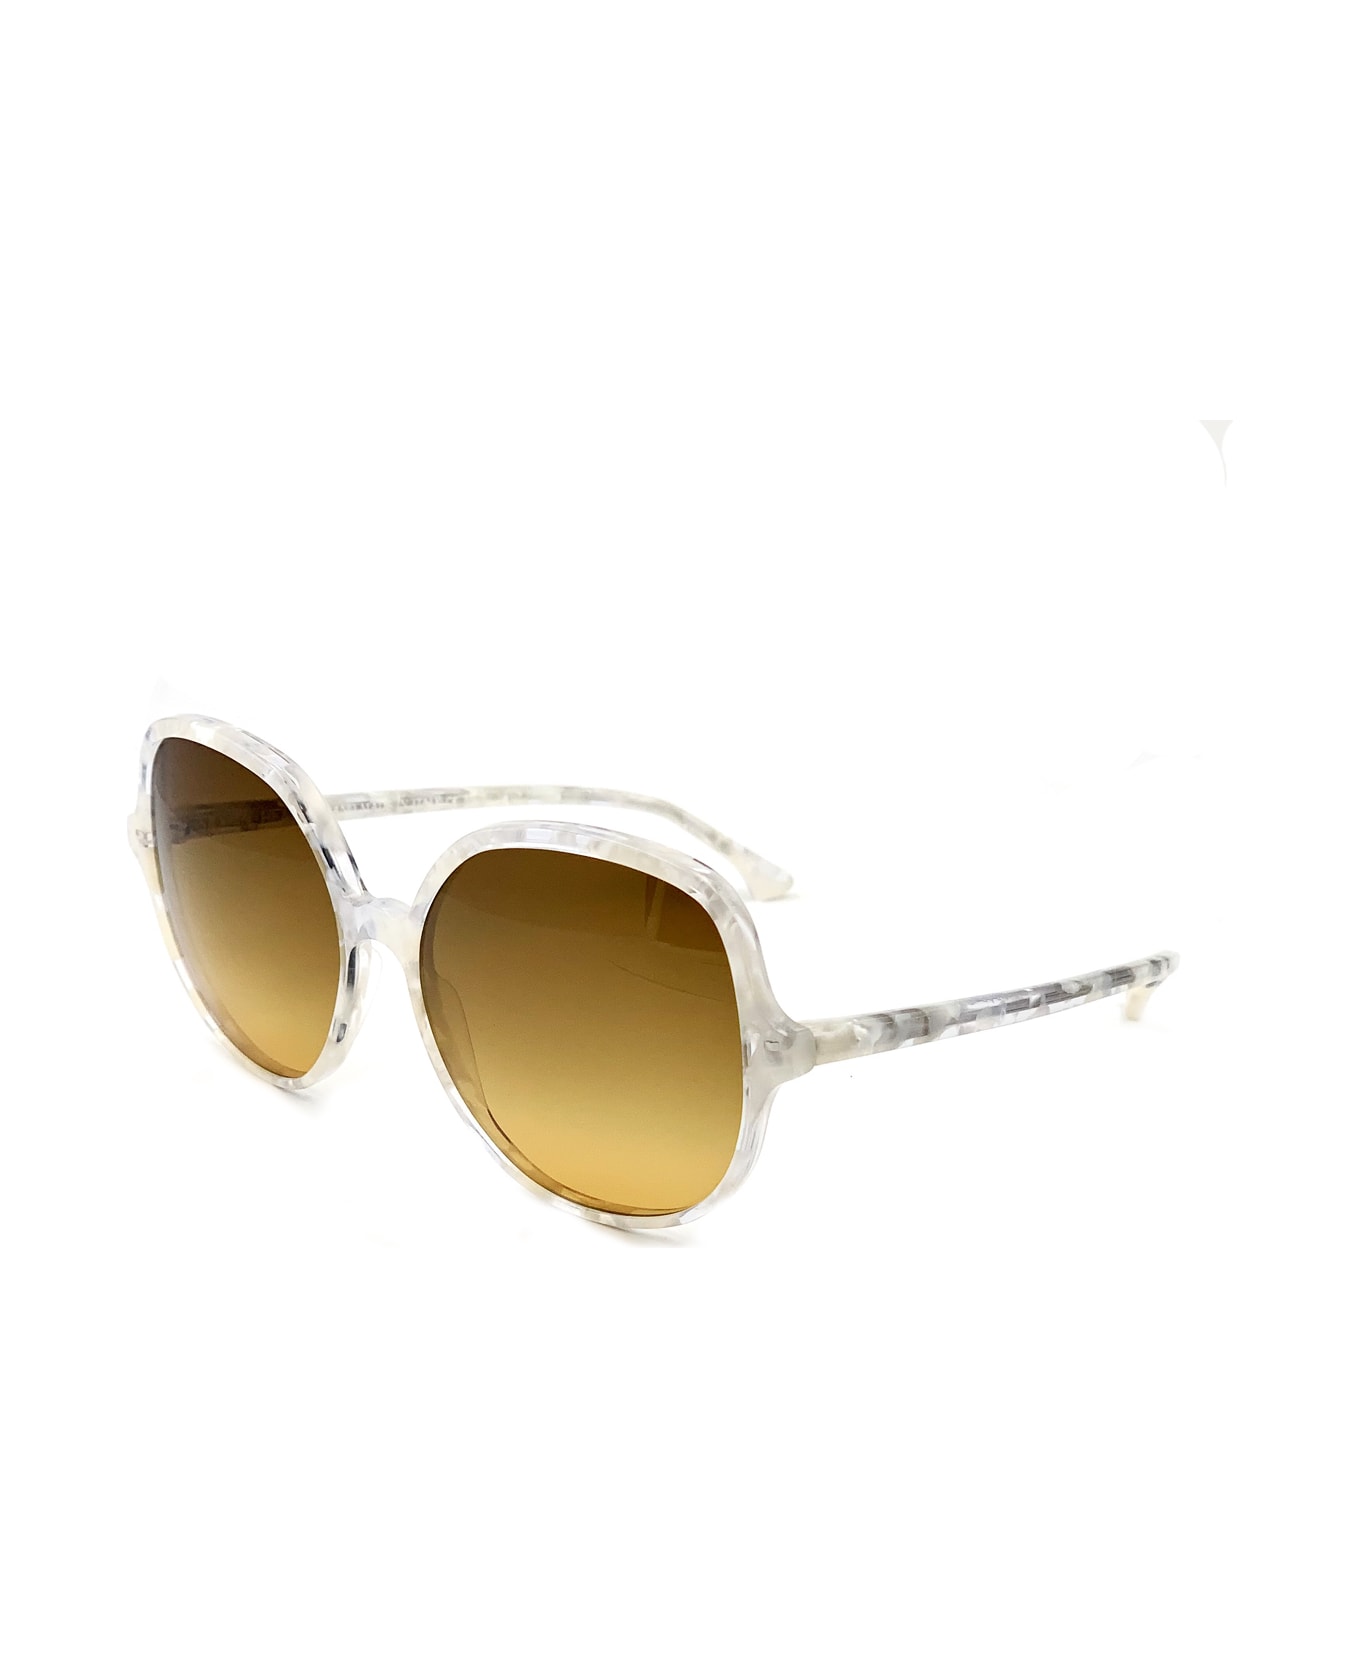 Silvian Heach Drag C661 Sunglasses - Avorio